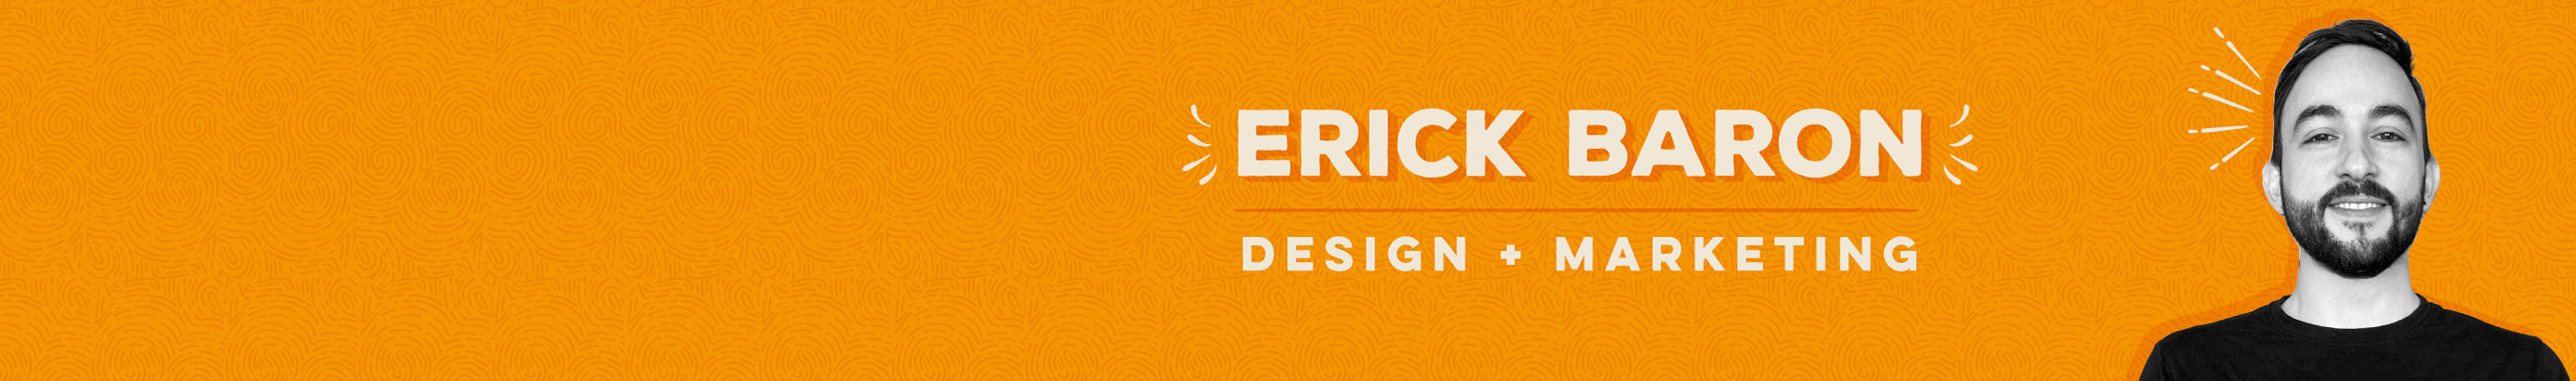 Erick Barón's profile banner